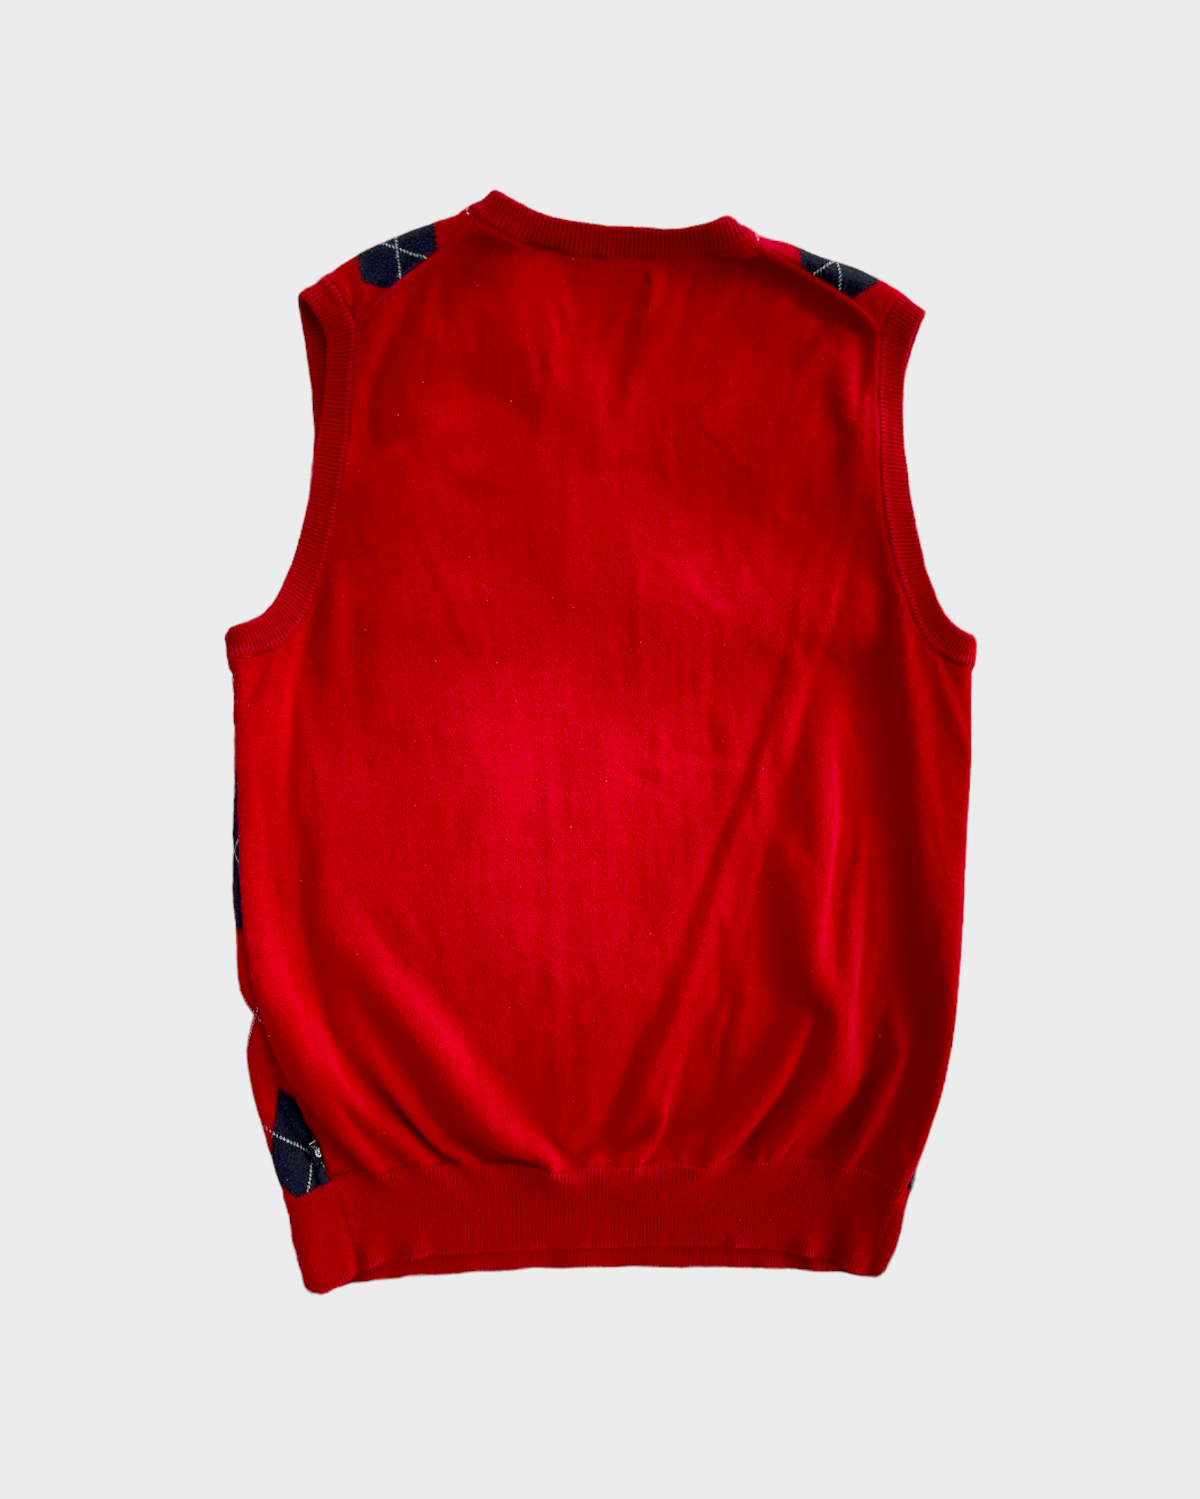 Chaps Red Argyle Grandpa Sweater Vest (S)